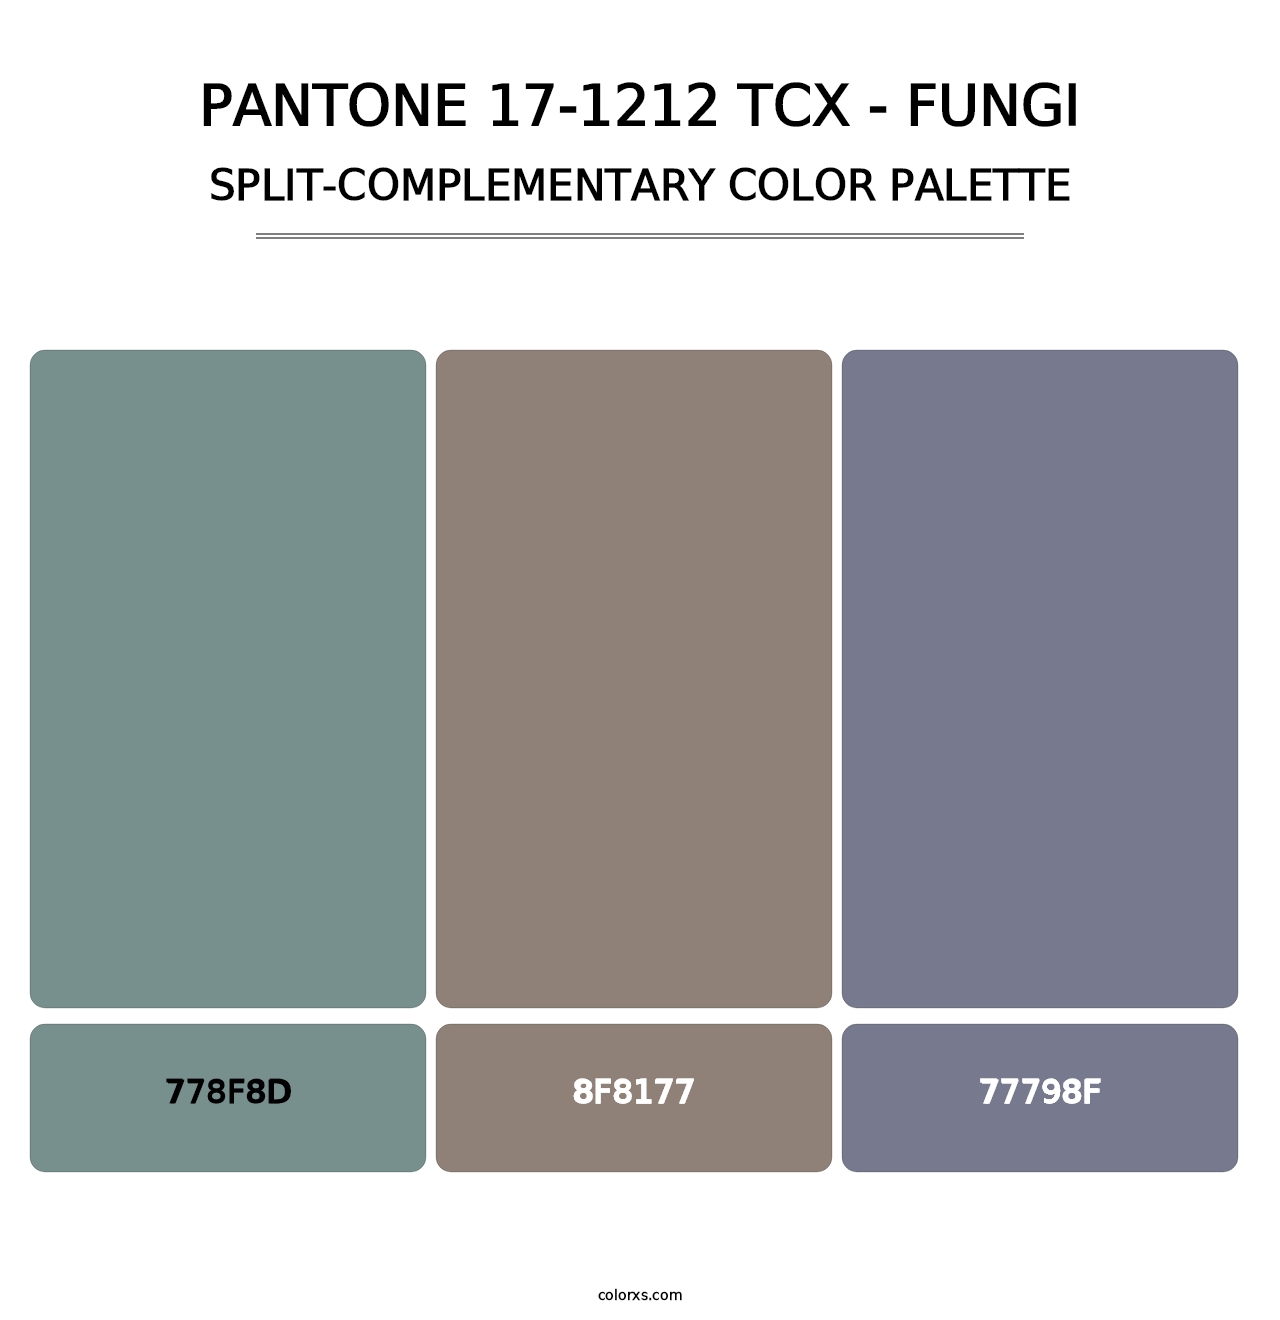 PANTONE 17-1212 TCX - Fungi - Split-Complementary Color Palette